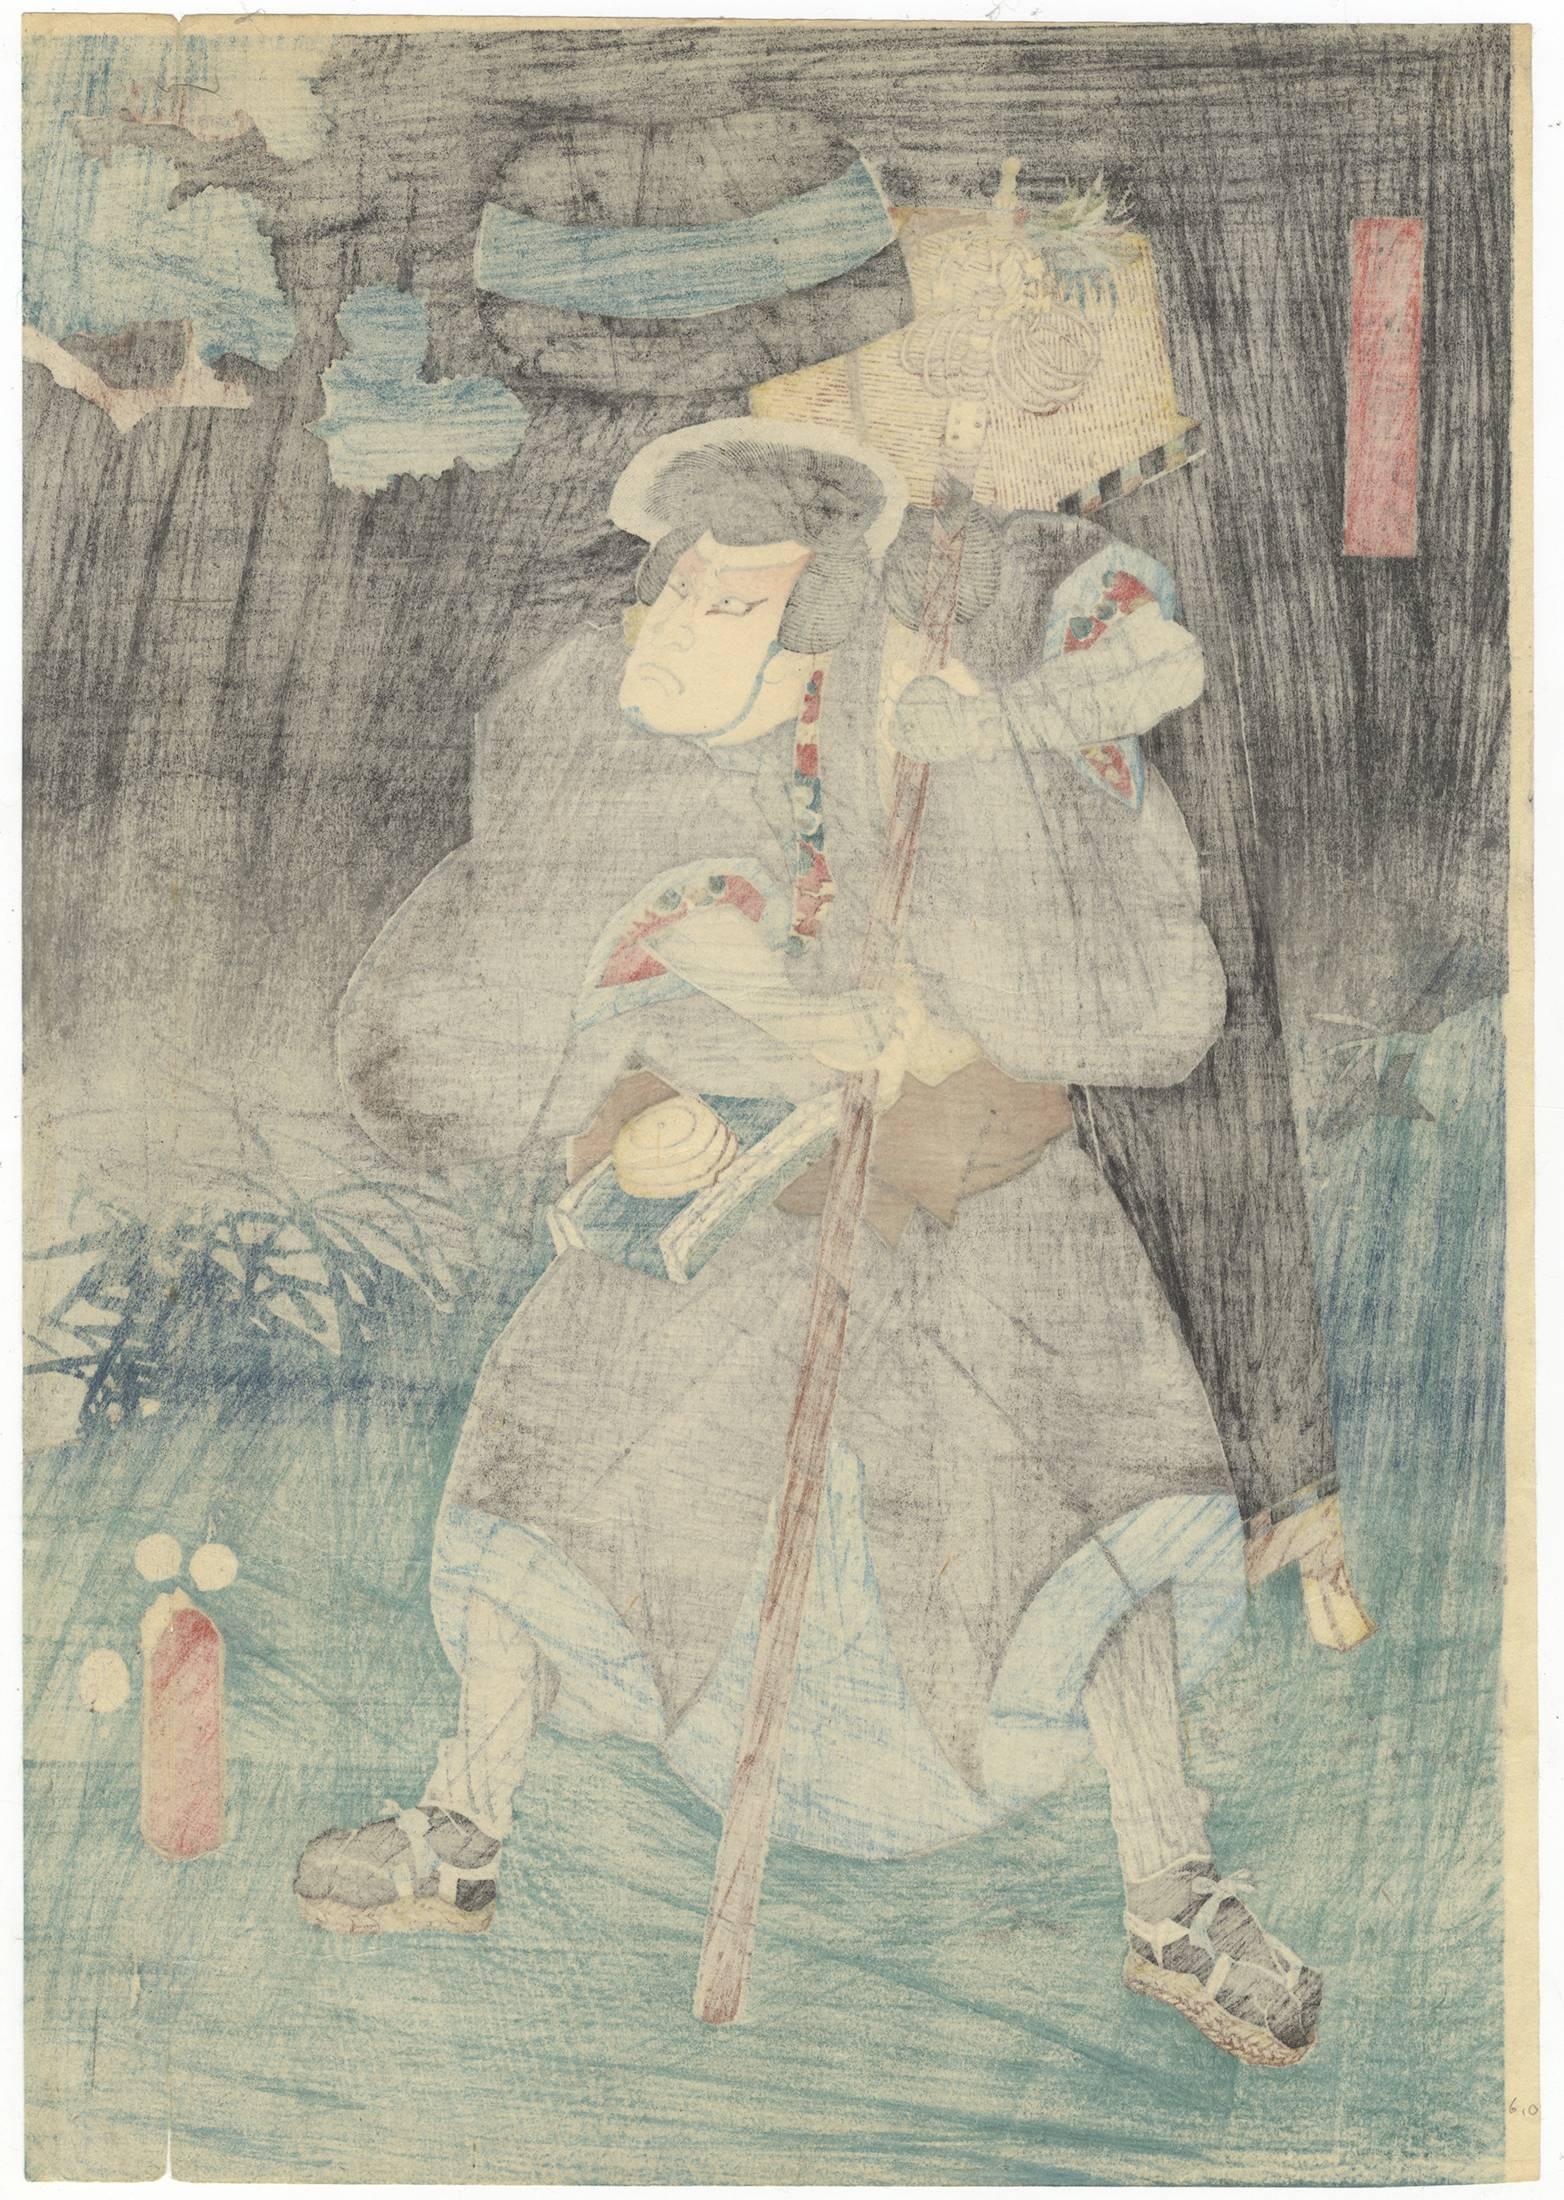 Artiste : Toyokuni III Utagawa (1877-1945)
Titre : L'esprit de la princesse Yaegaki, pièce de théâtre Kabuki : Otogi banashi hakata no imaori
Date : 1852
Editeur : Yamamotoya Heikichi
Taille : (R) 36.3 x 25.1 (C) 36 x 25.4 (L) 36.2 x 25.3 cm
Rapport